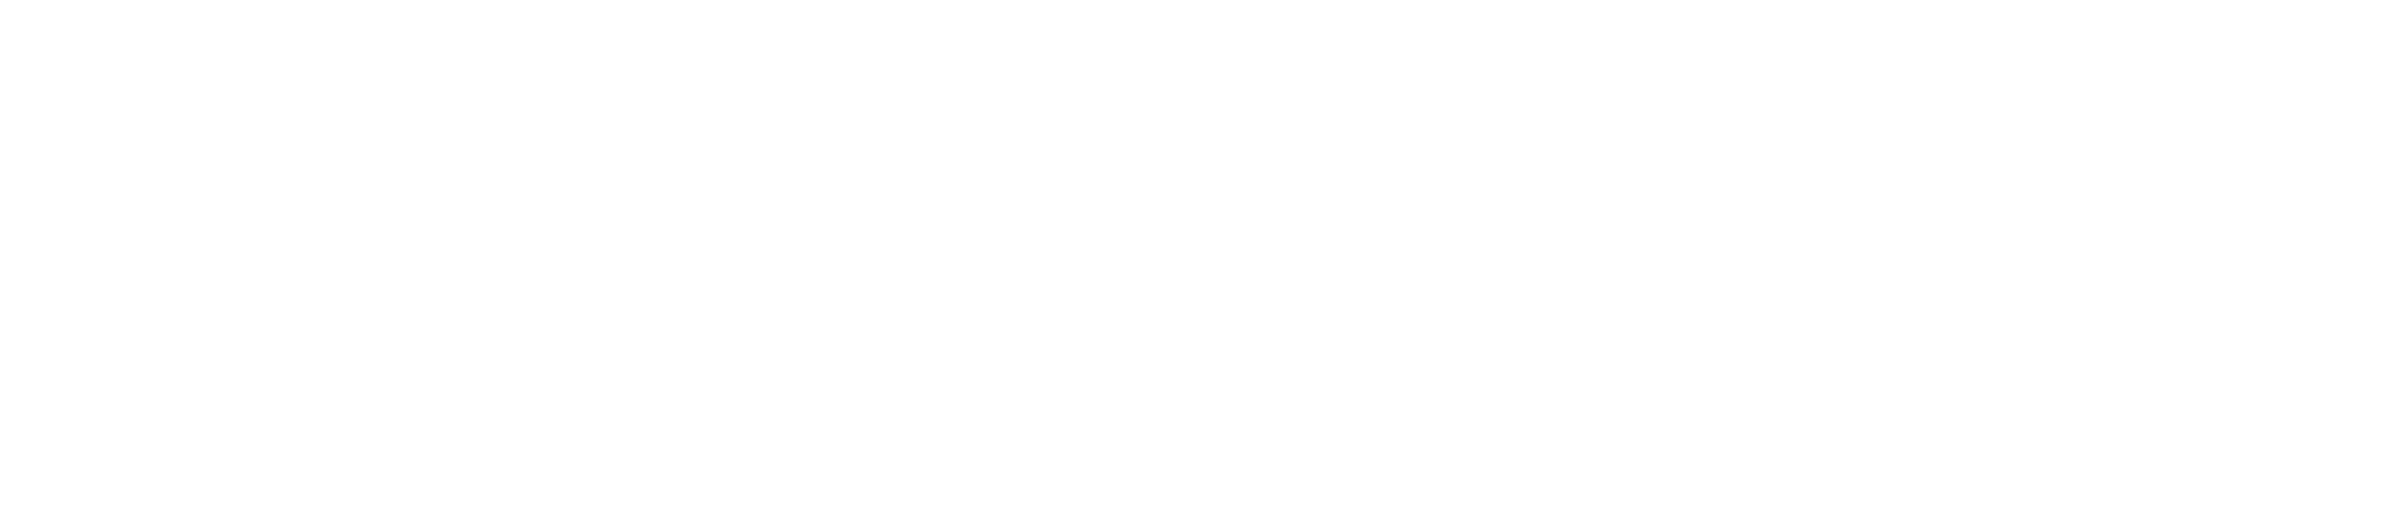 Nginx Logo - Nginx Logo PNG Transparent & SVG Vector